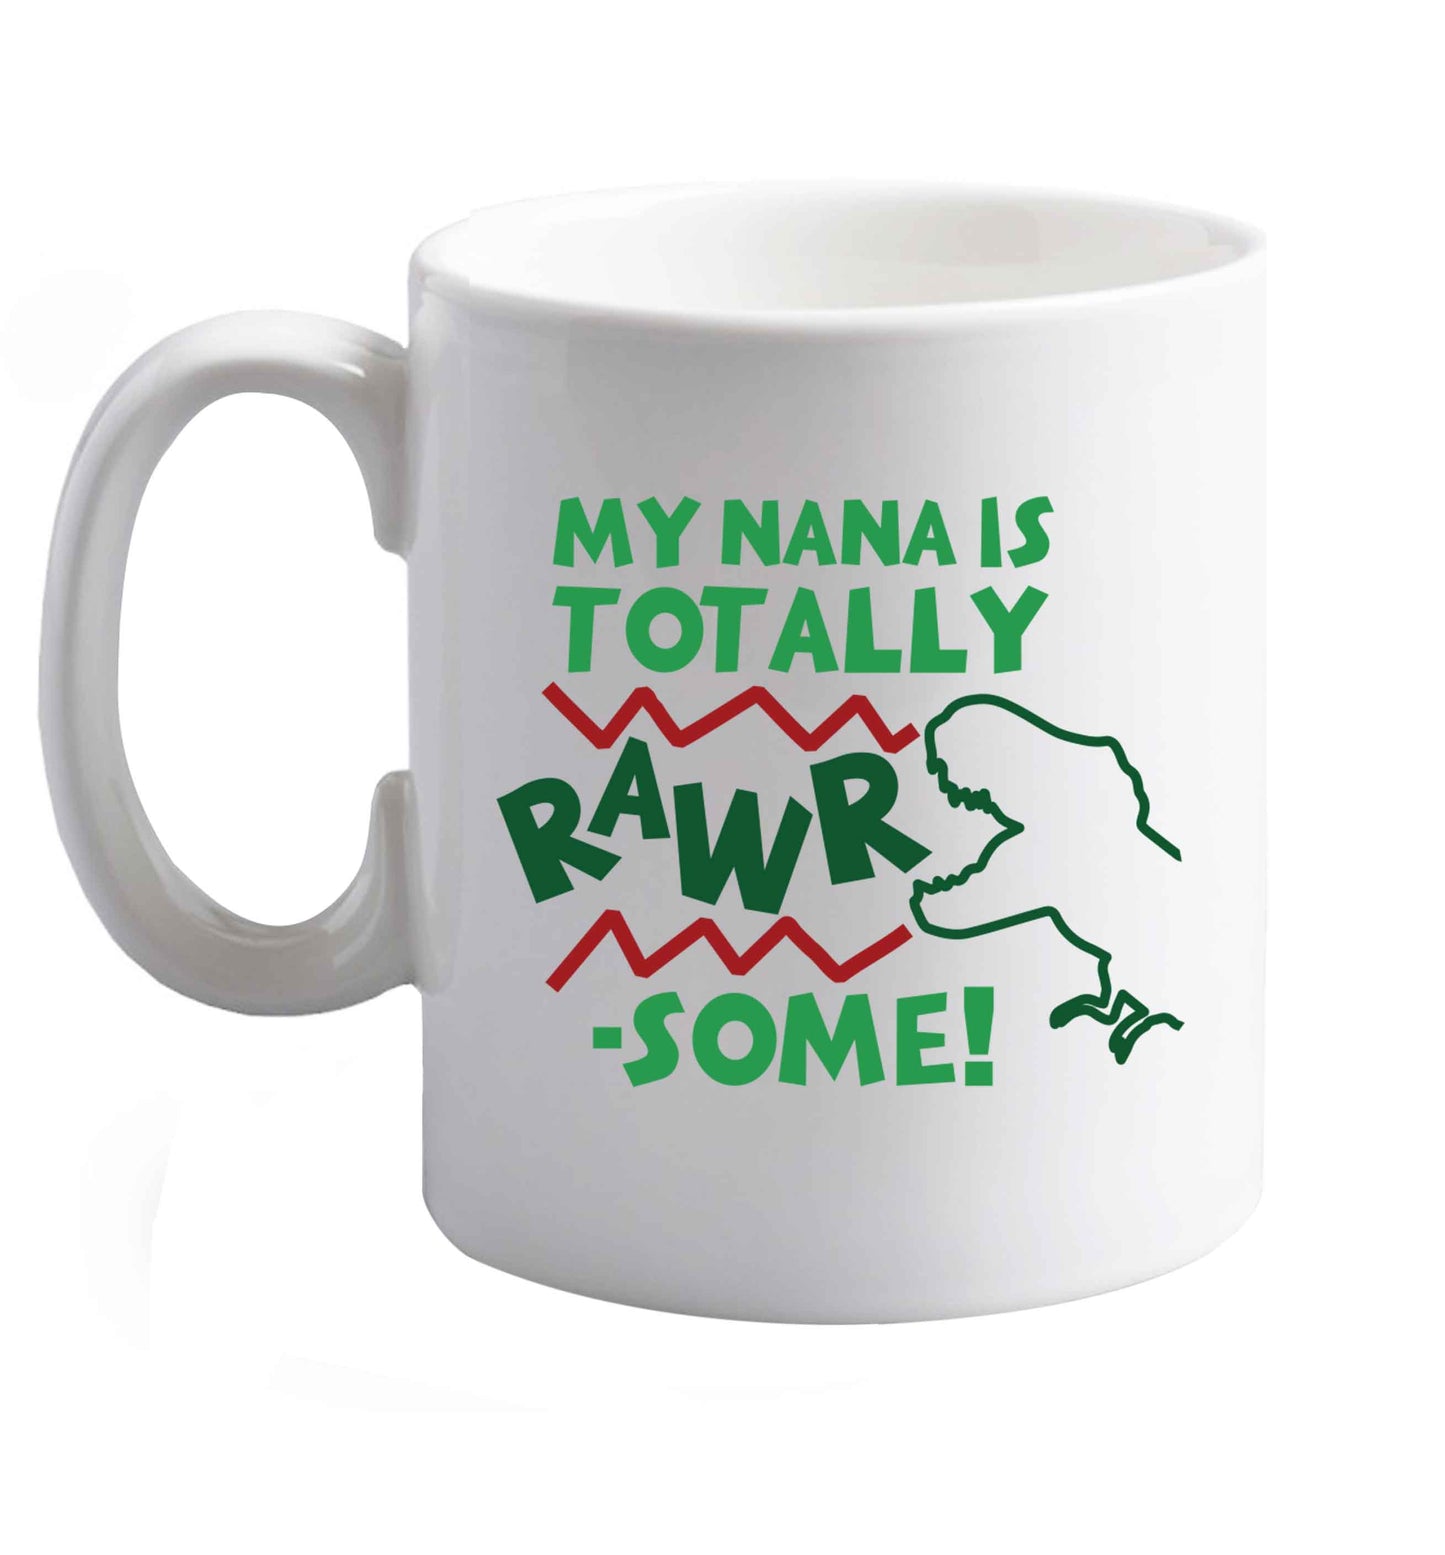 10 oz My nana is totally rawrsome ceramic mug right handed